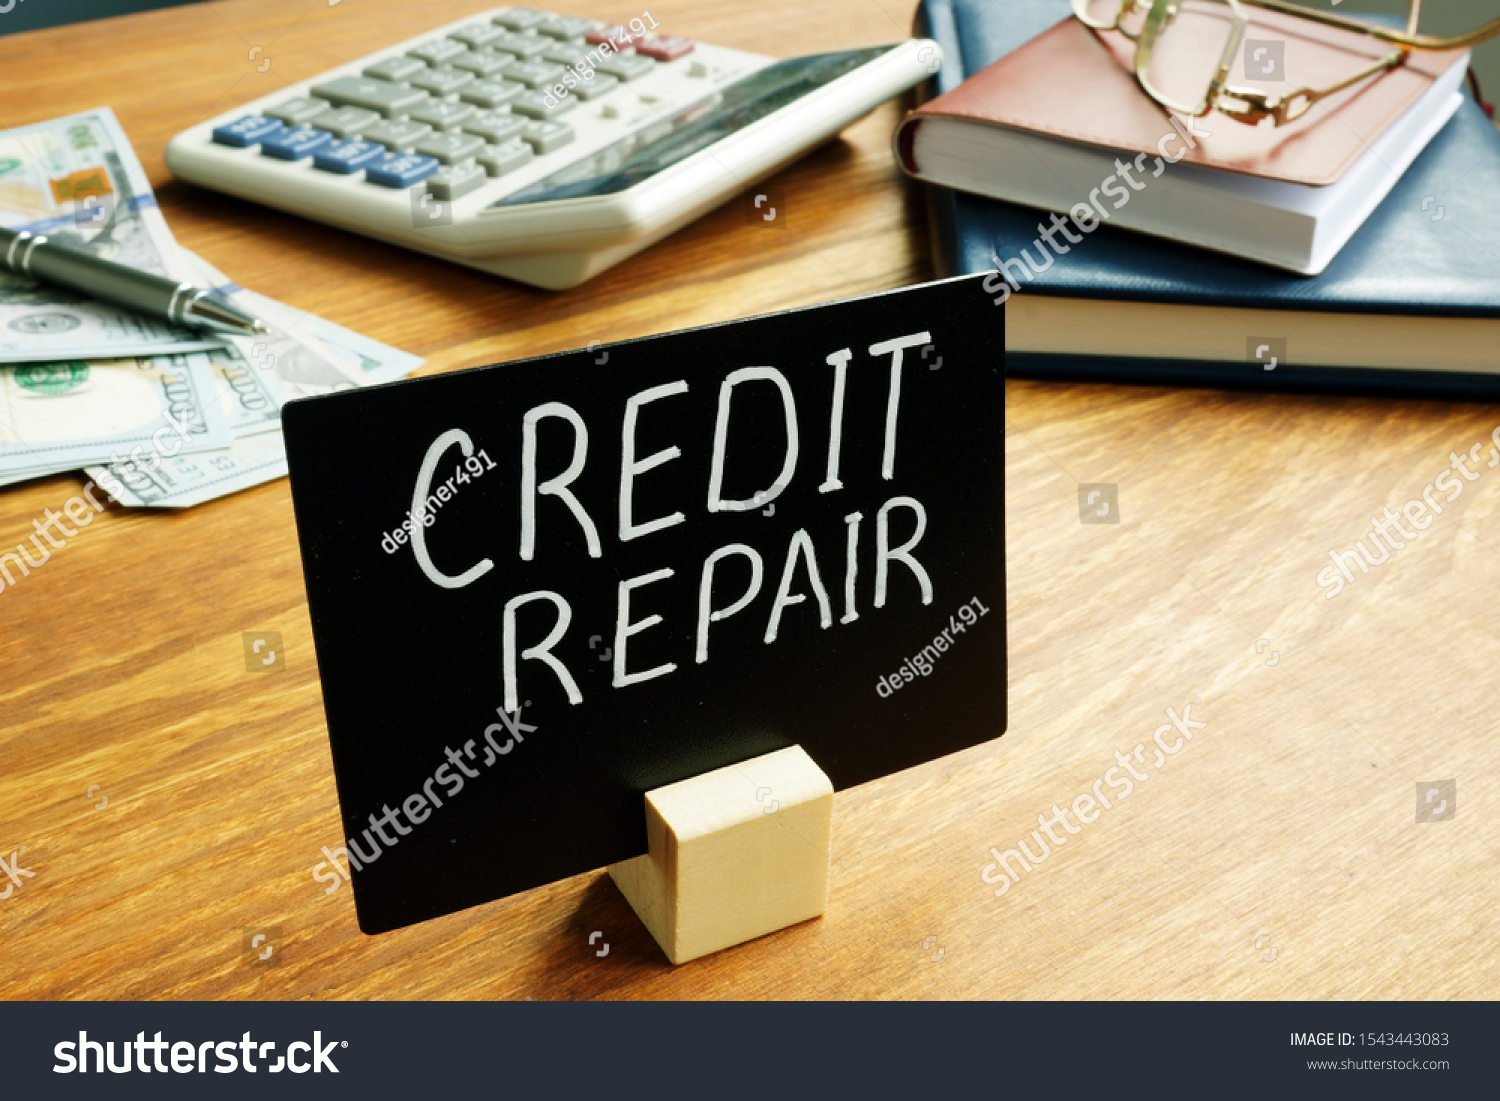 7,294 Credit repair Images, Stock Photos & Vectors | Shutterstock